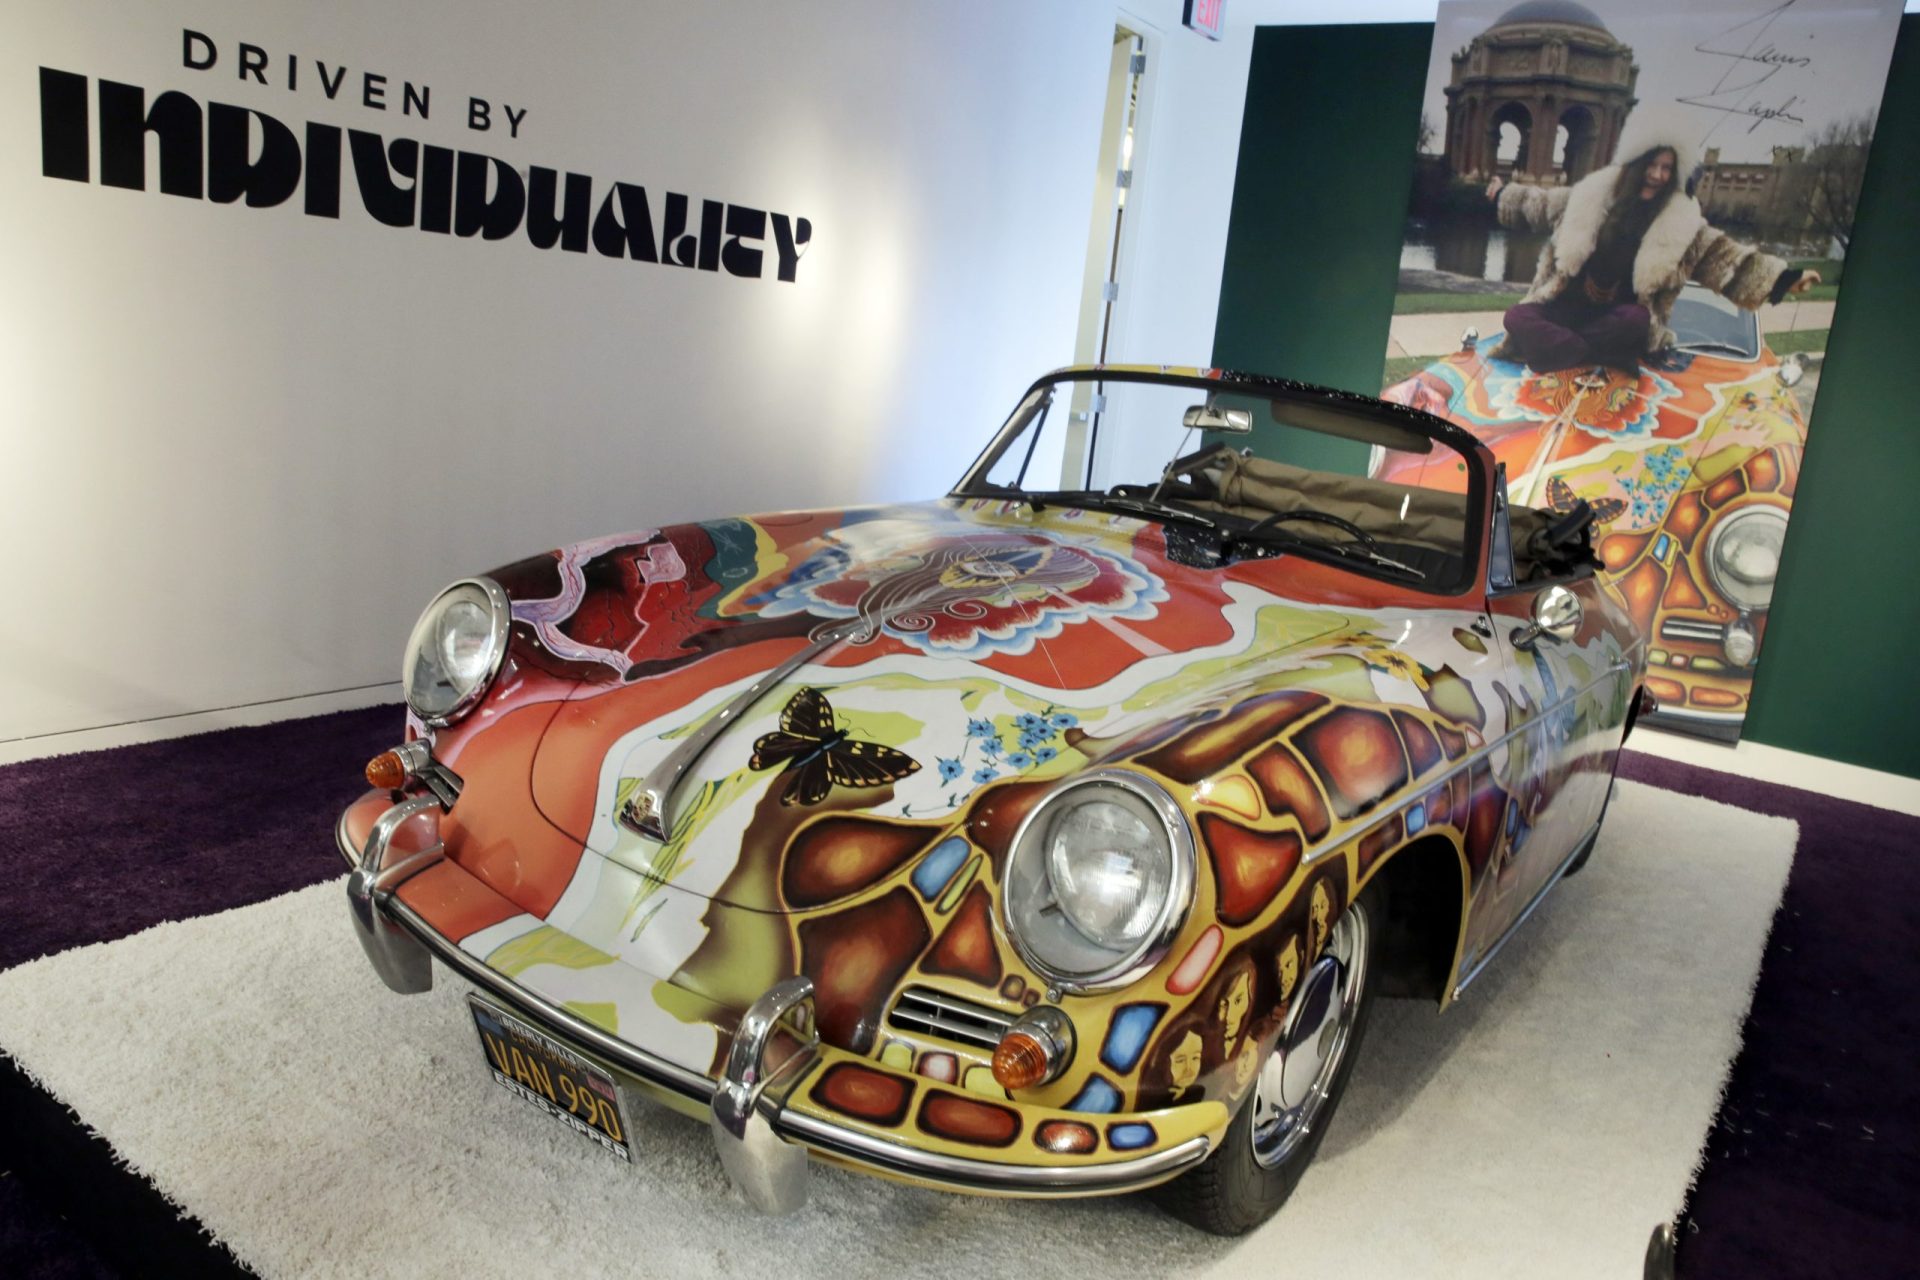 Porsche de Janis Joplin leiloado por valor recorde